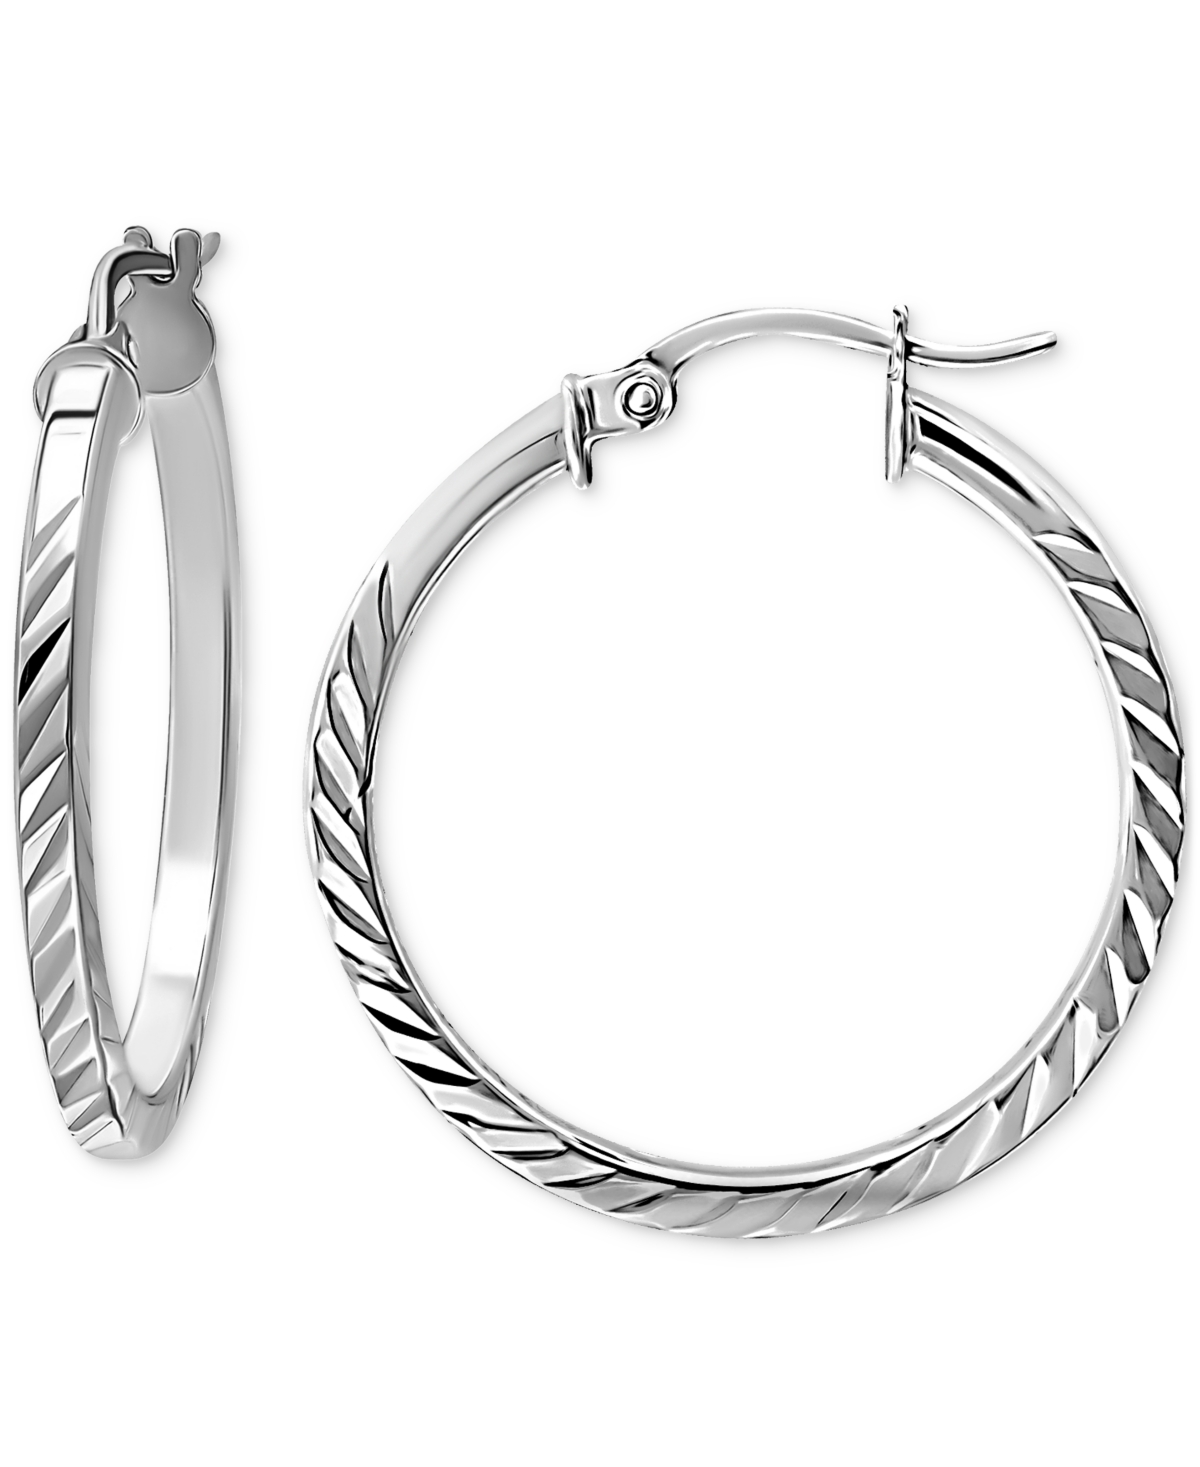 Giani Bernini Ridged Tube Small Hoop Earrings In Sterling Silver, 25mm, Created For Macy's